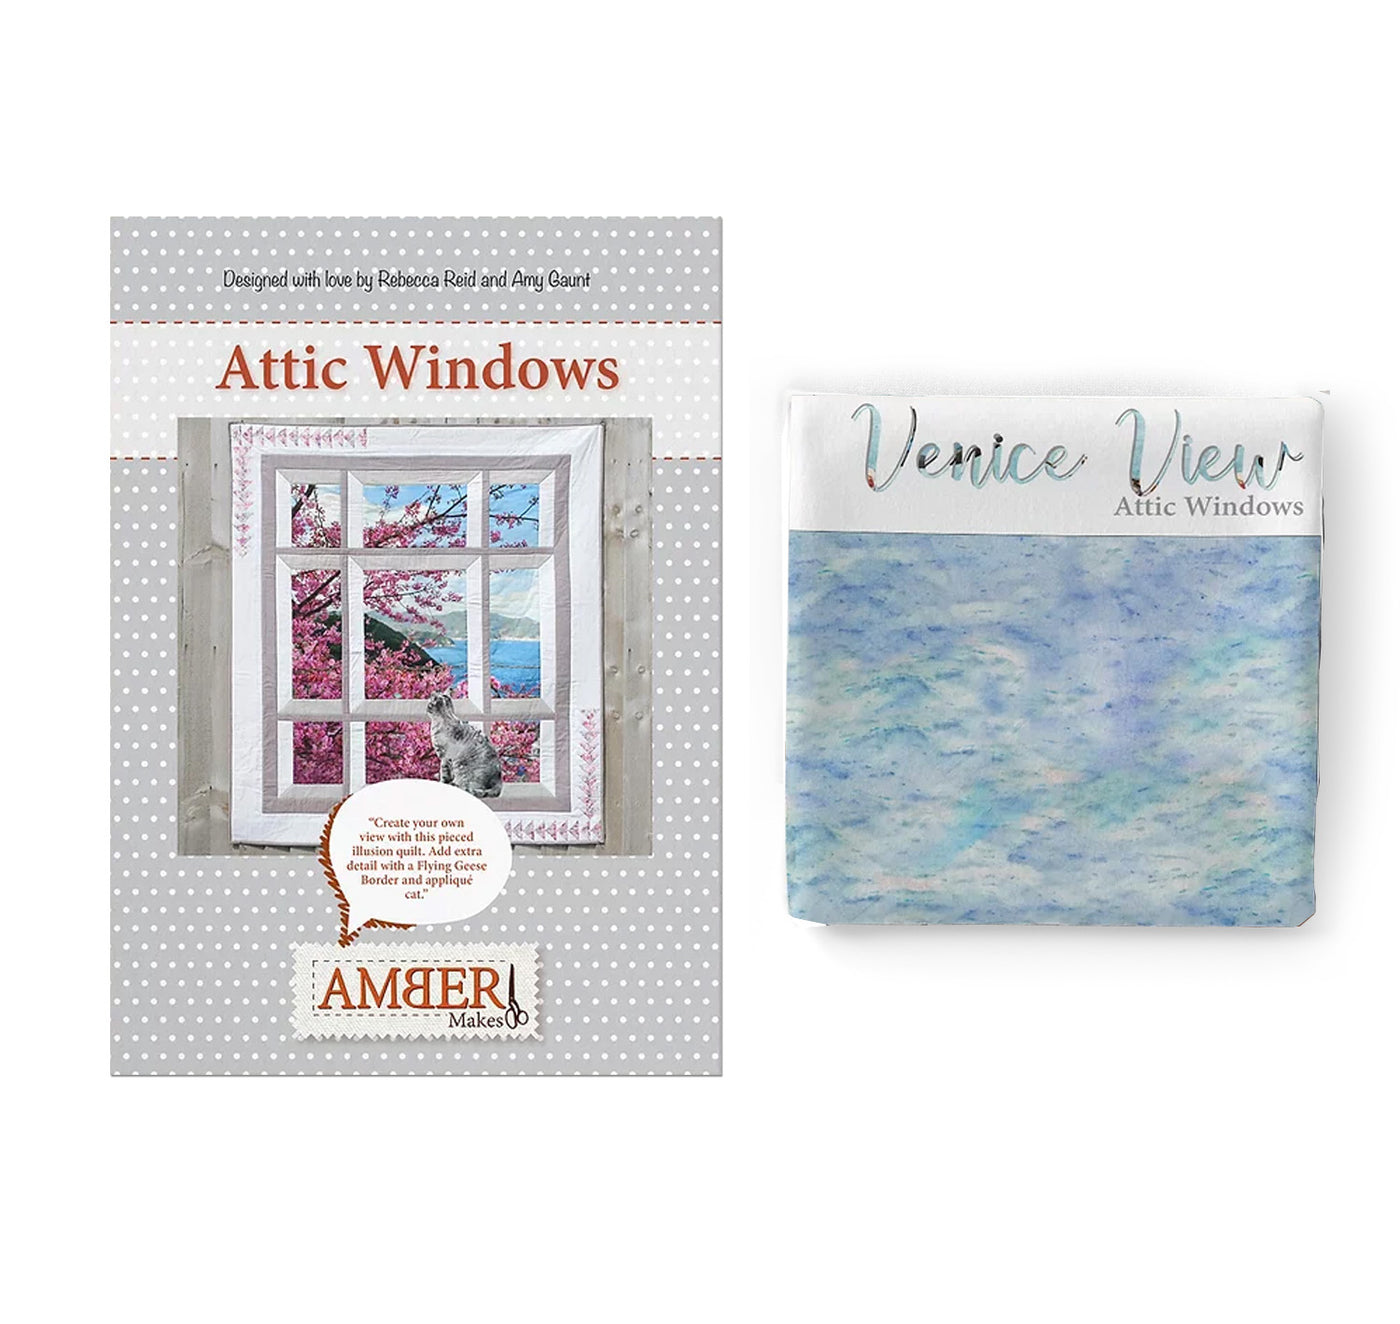 Attic Windows - Venice View Kit